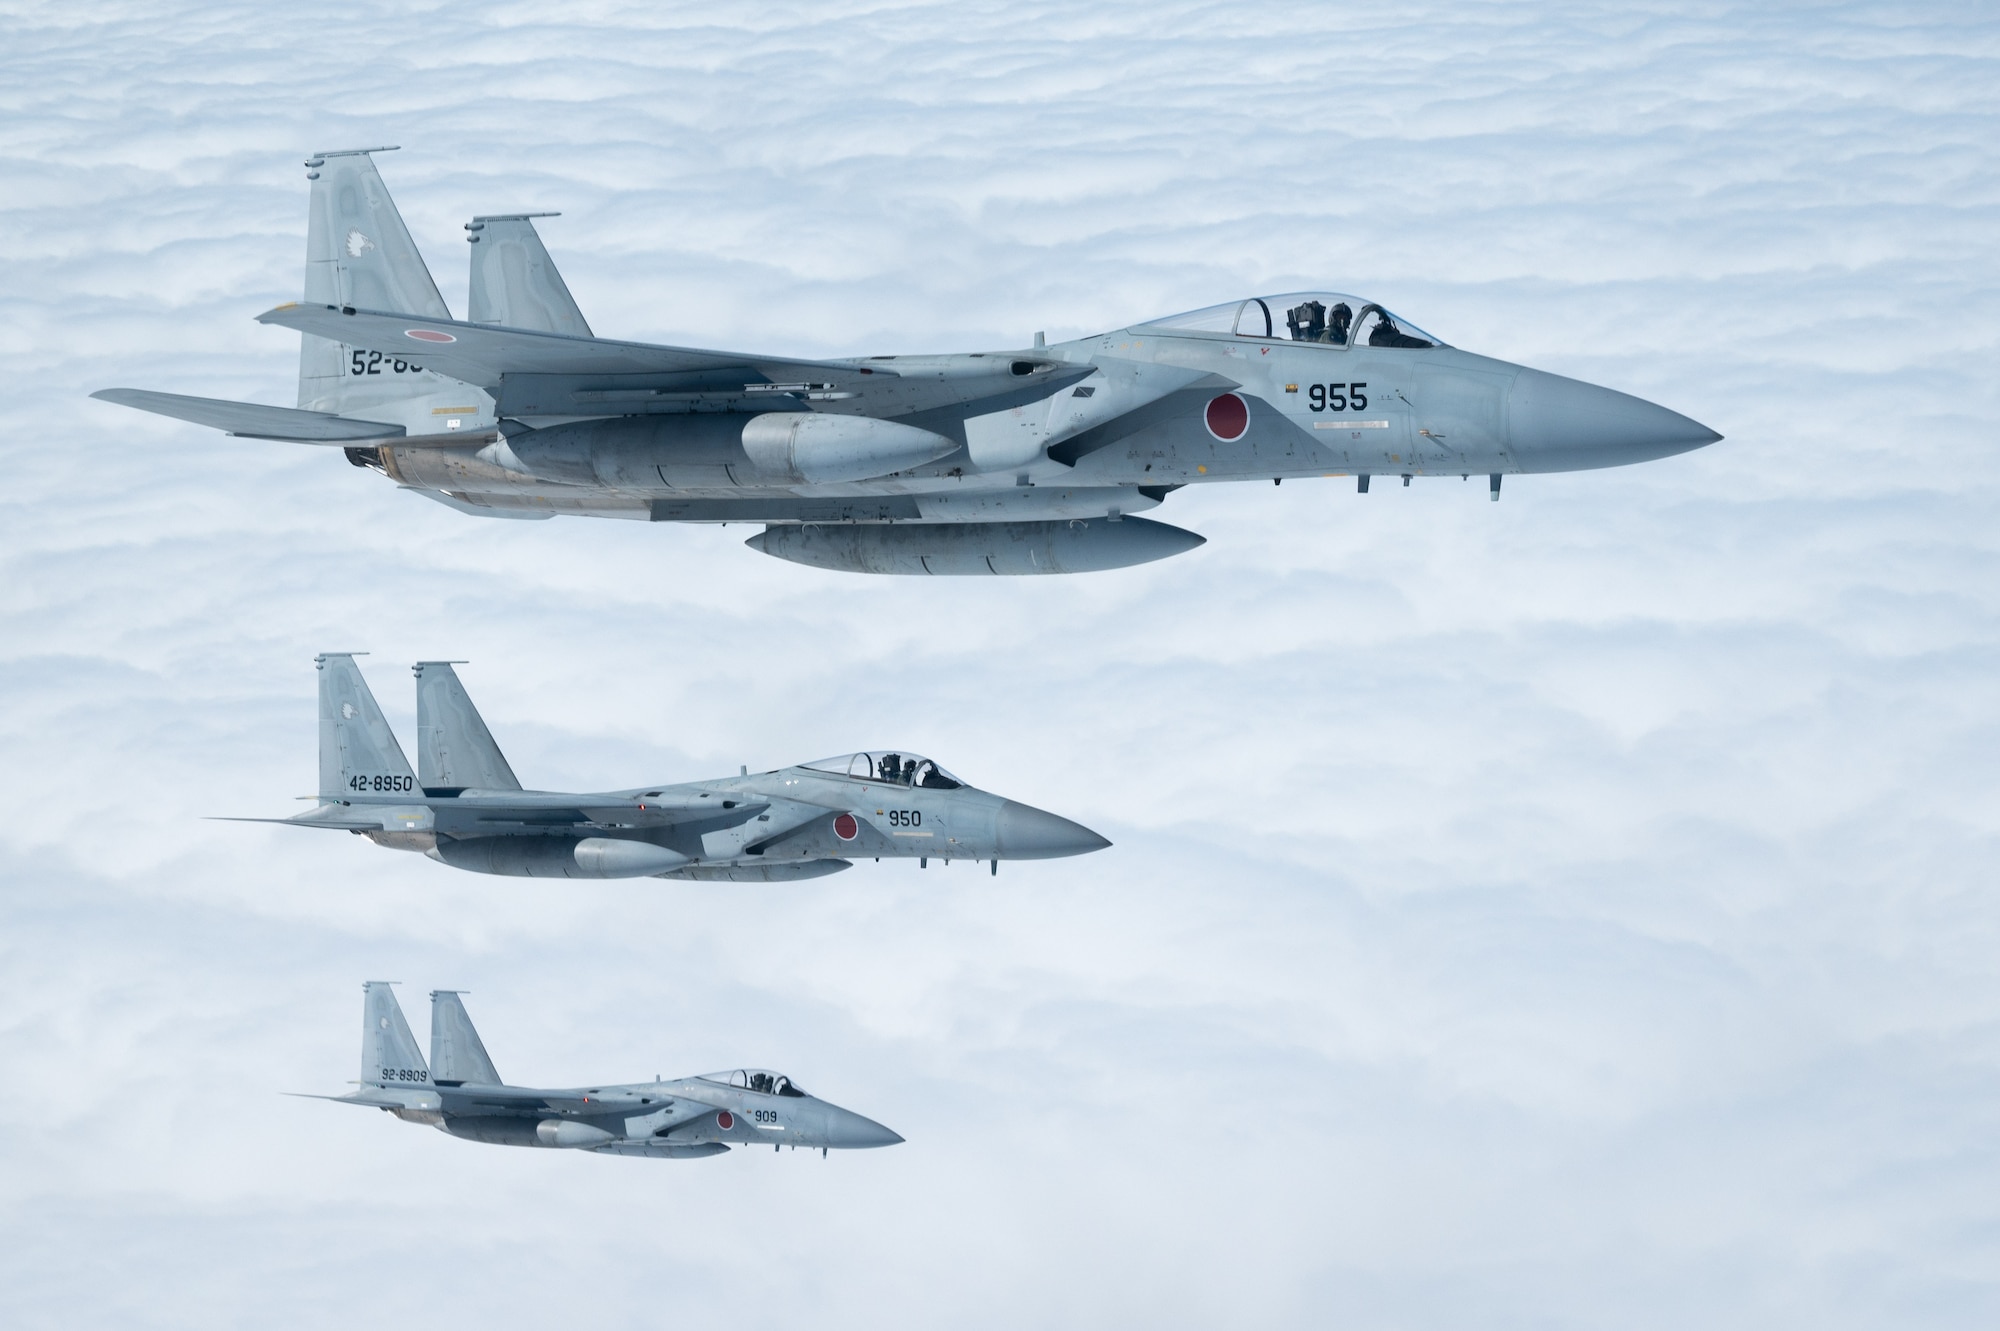 Japan Air Self-Defense Force F-15J Eagles fly alongside a U.S. Air Force KC-135 Stratotanker